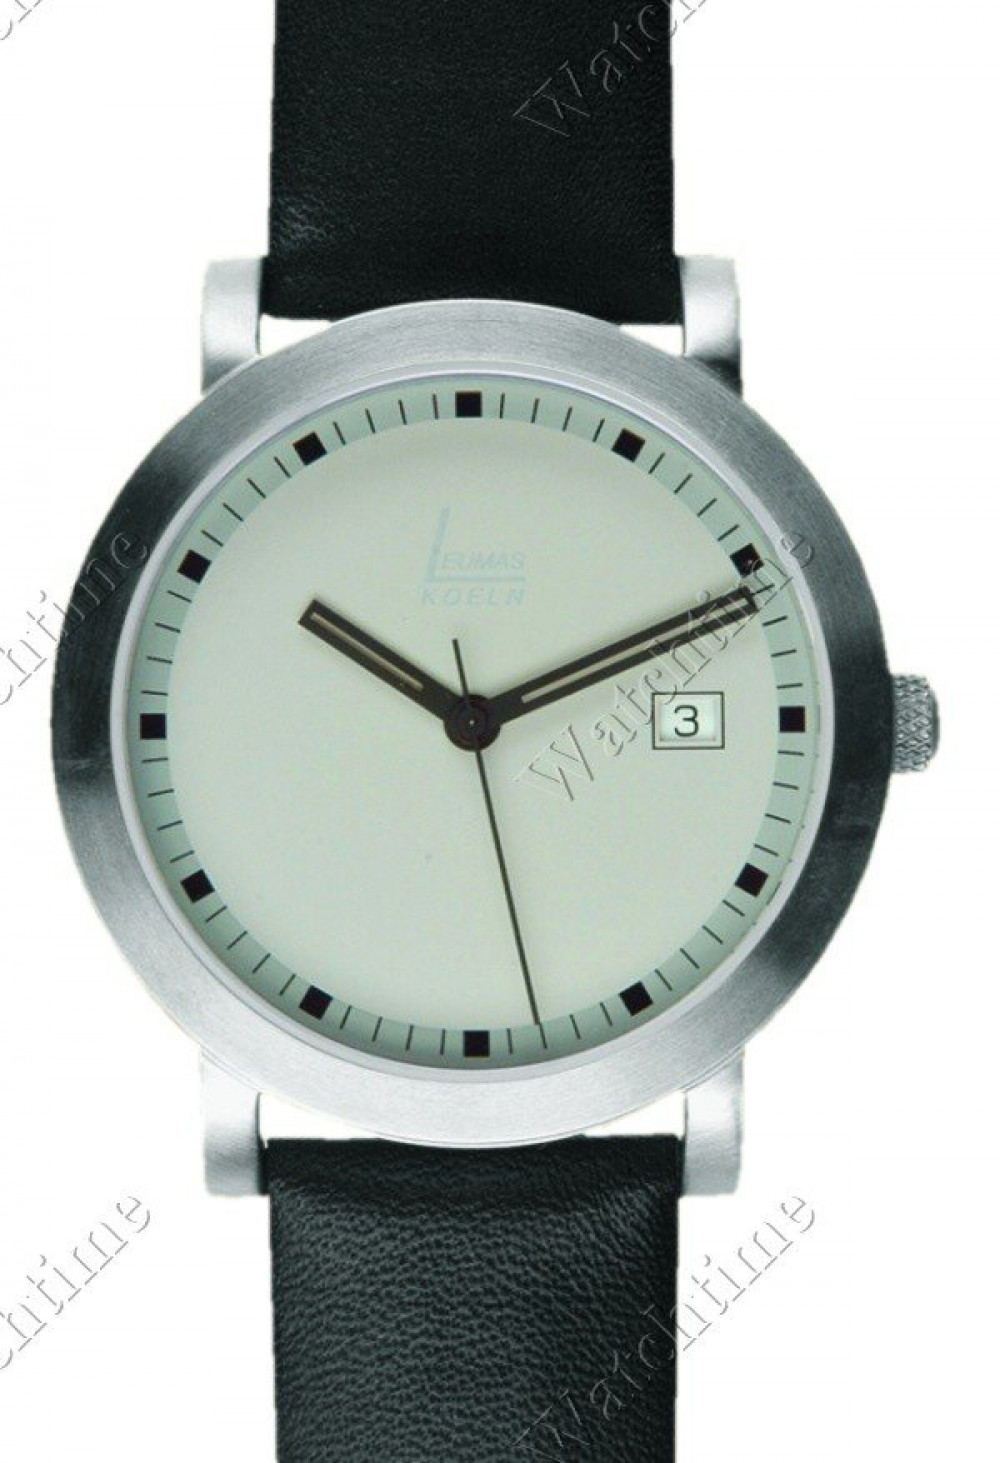 Zegarek firmy Leumas, model 